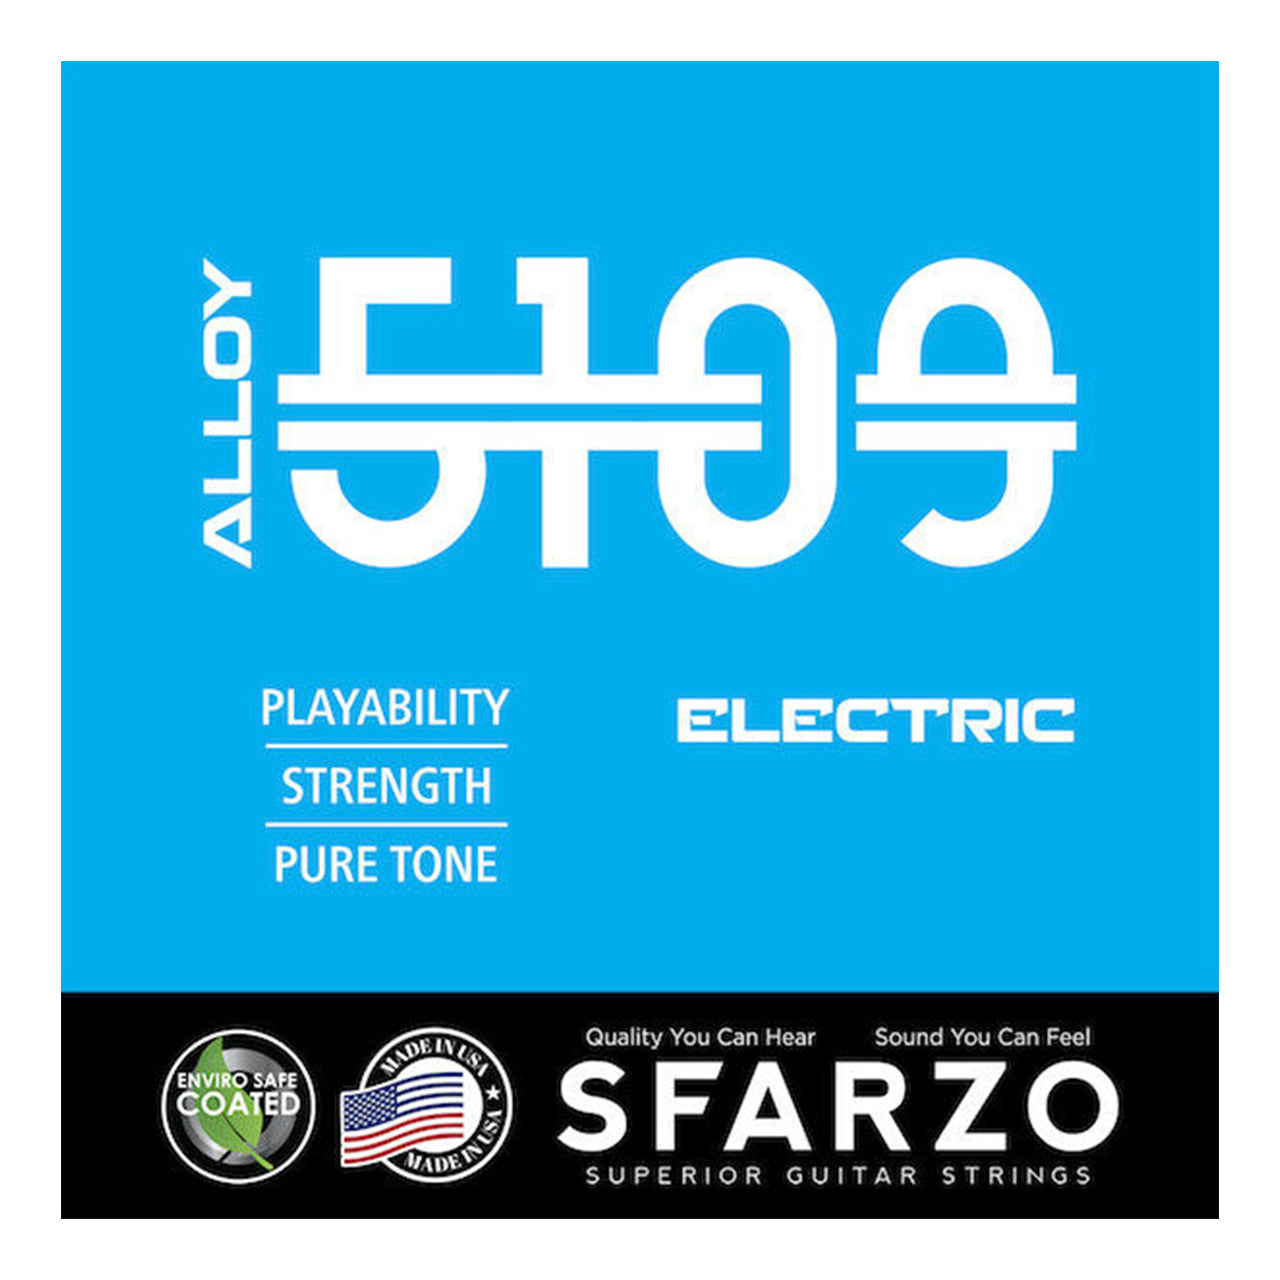 Sfarzo Alloy 5109 Premium Made Electric Guitar Strings, 10-46